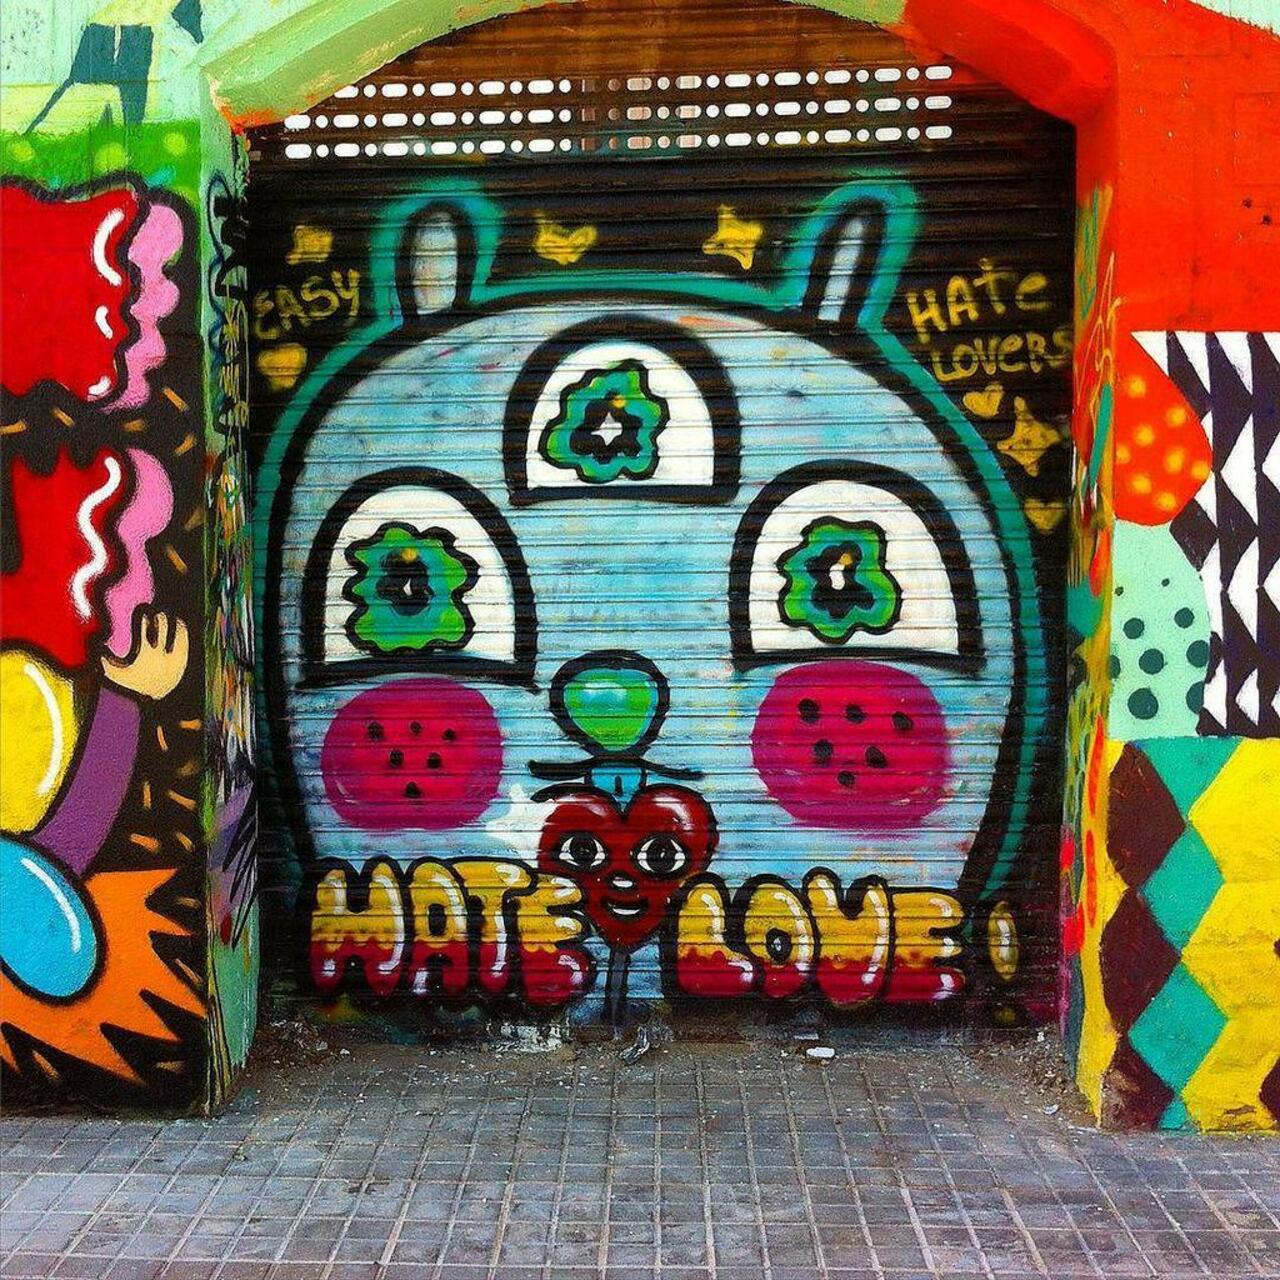 Hate love!
#color #colormonth #monster #love #hate #graffiti #painting #city #streetart #streetartbcn #streetphotog… http://t.co/9jVlidmPjb